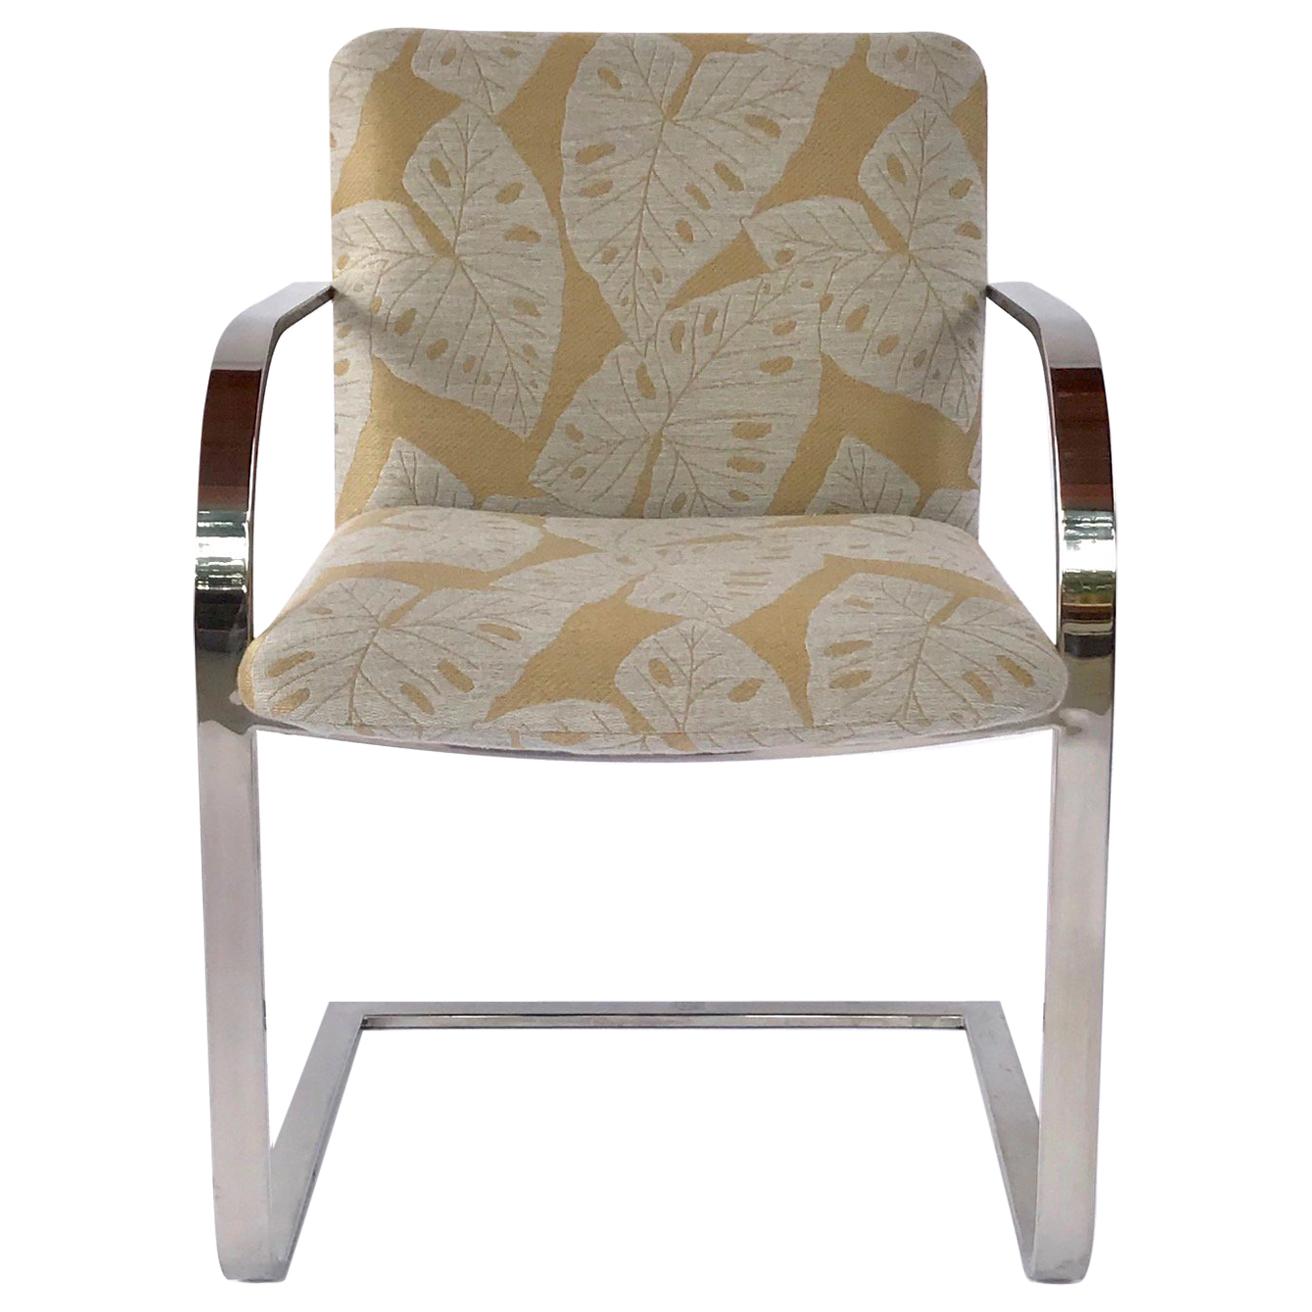 Mid-Century Modern Chrome Desk Chair with Tropical Print by Brueton